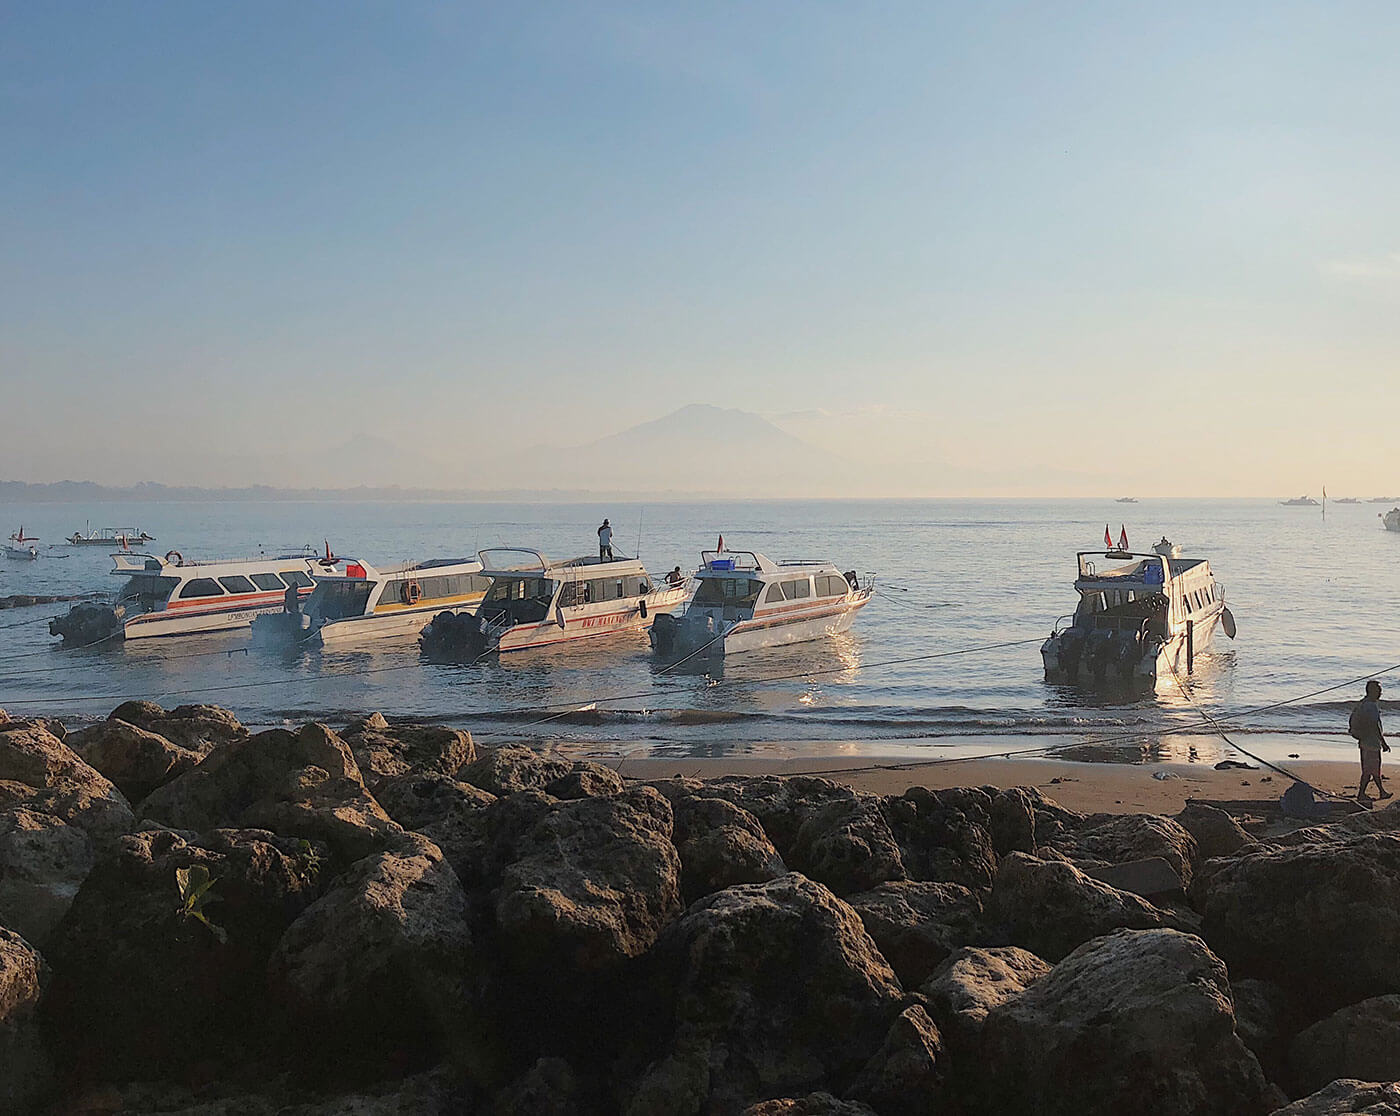 Sanur Beach: All the boats waiting to take you to Nusa Penida / Lembongan